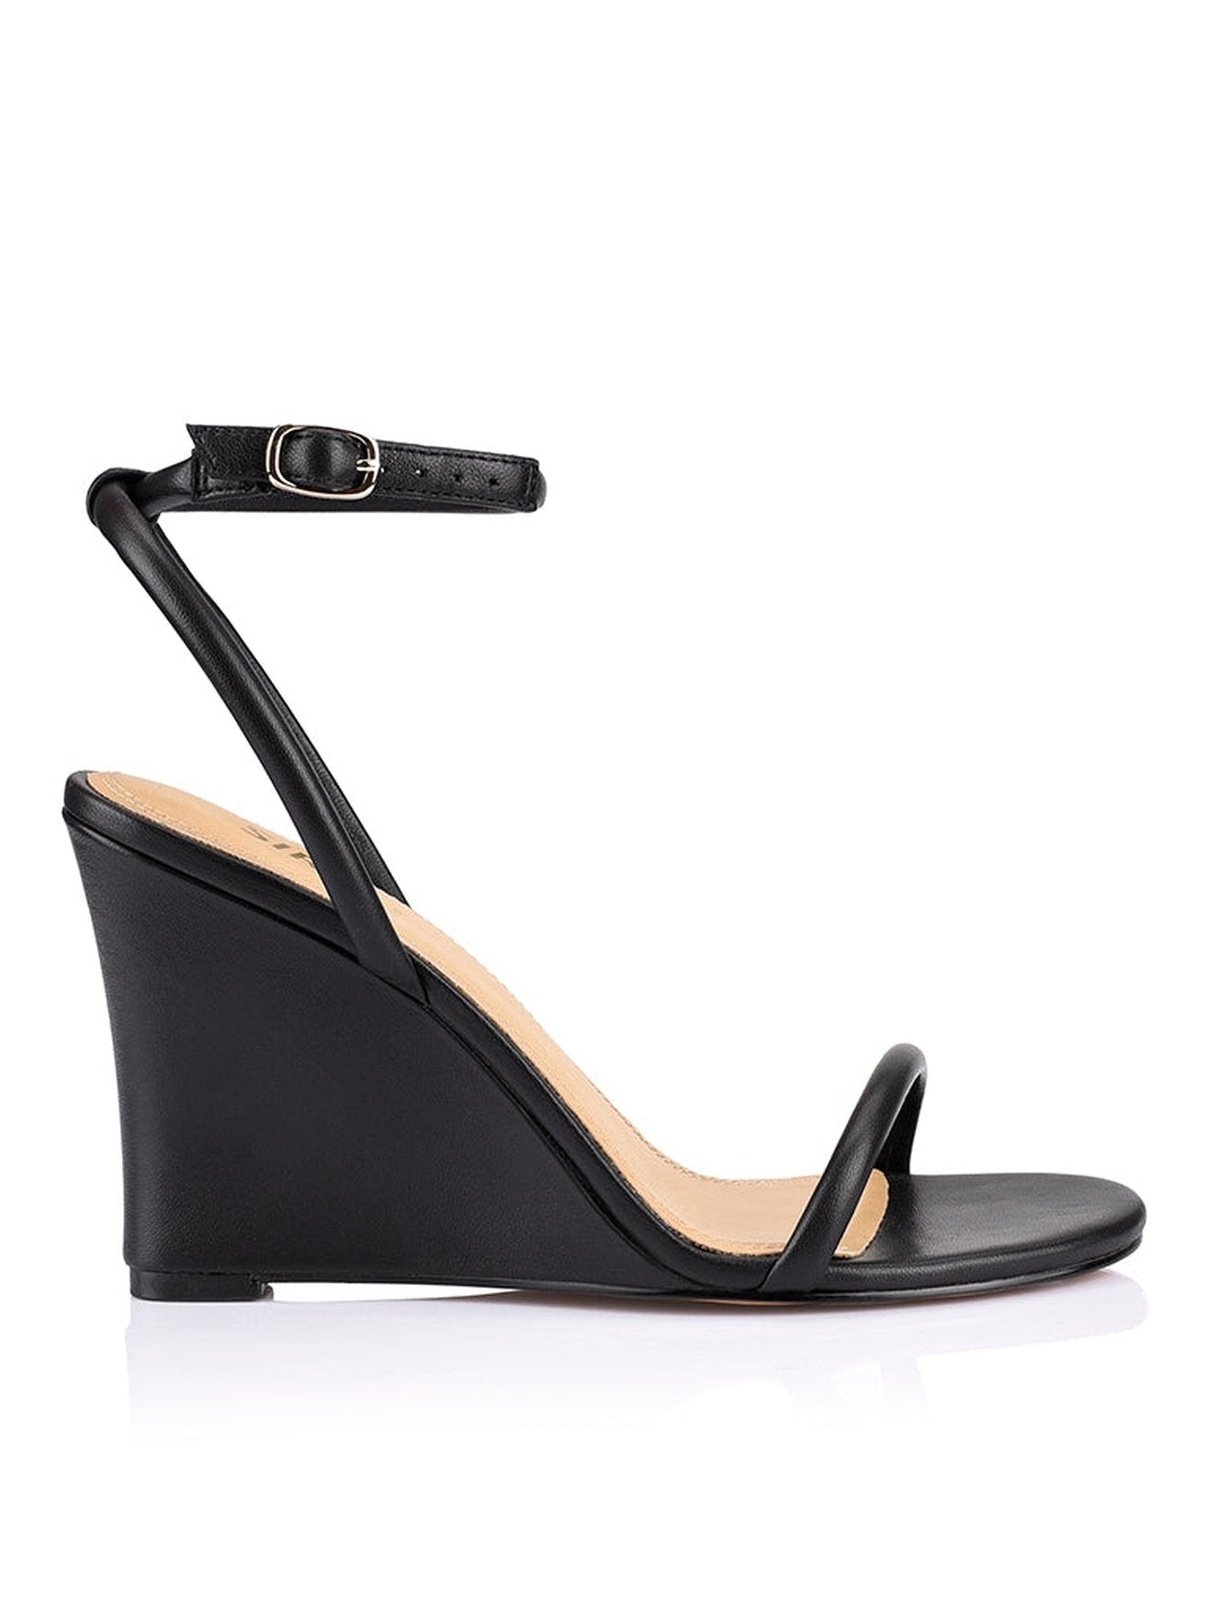 Bebe Wedge Sandals - Black Leather